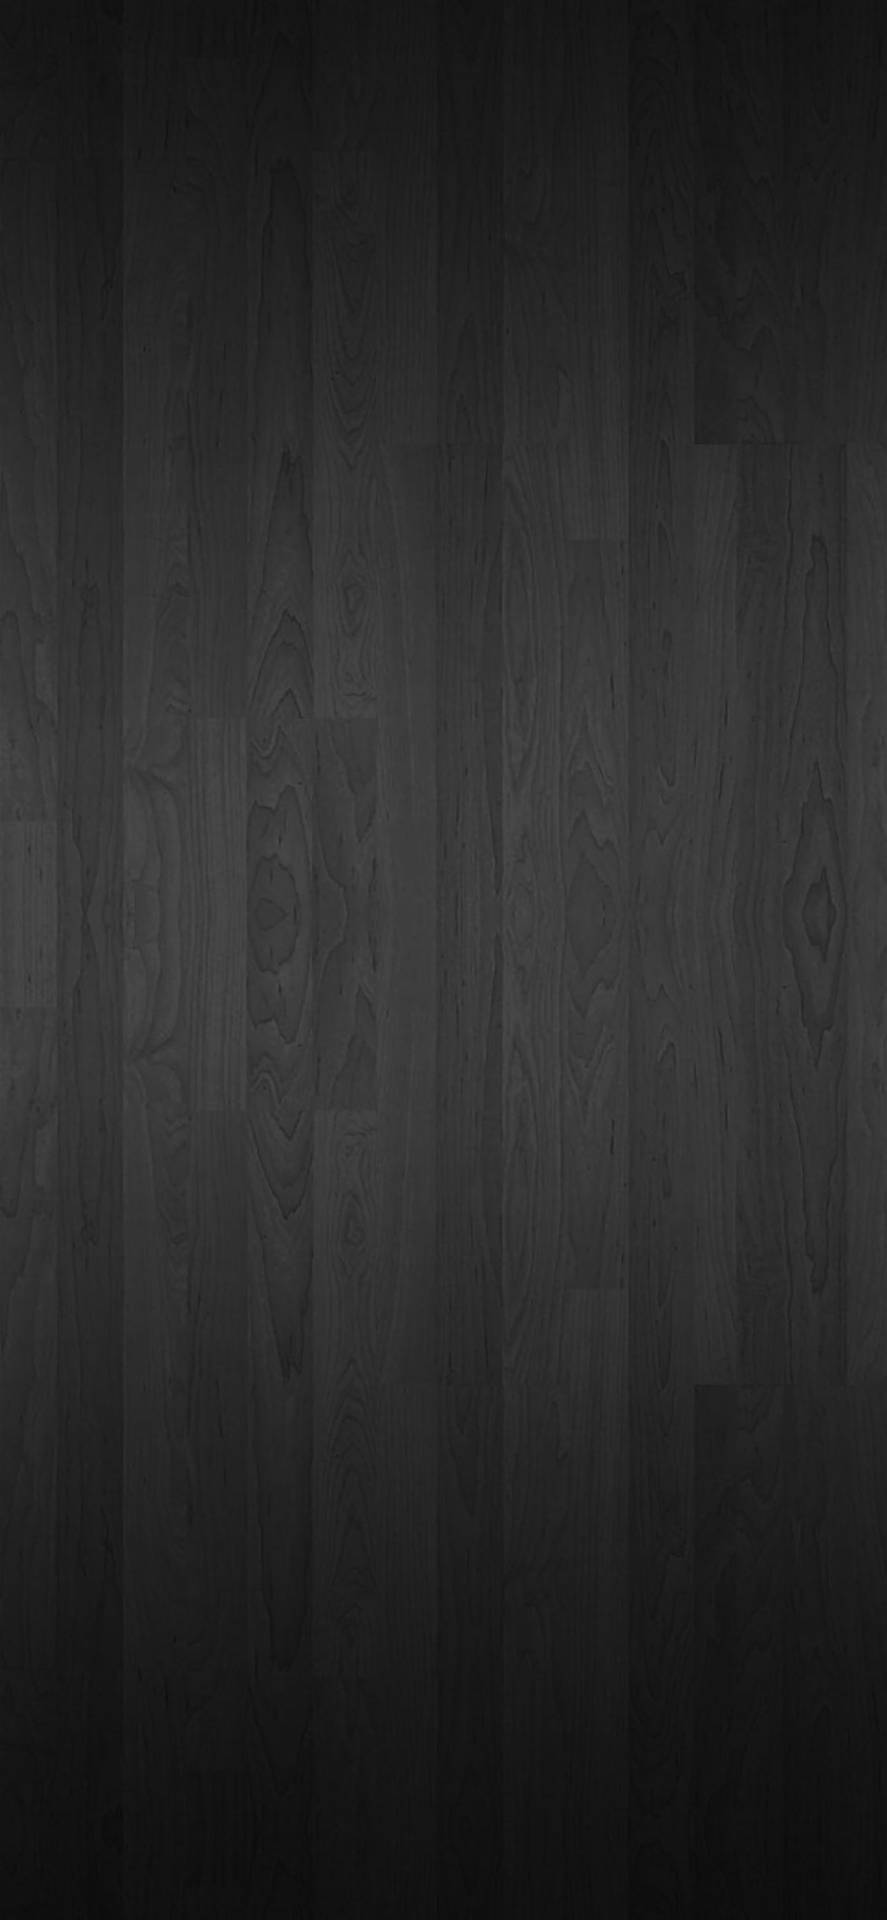 Captivating iPhone Dark Wood Grunge Background Wallpaper